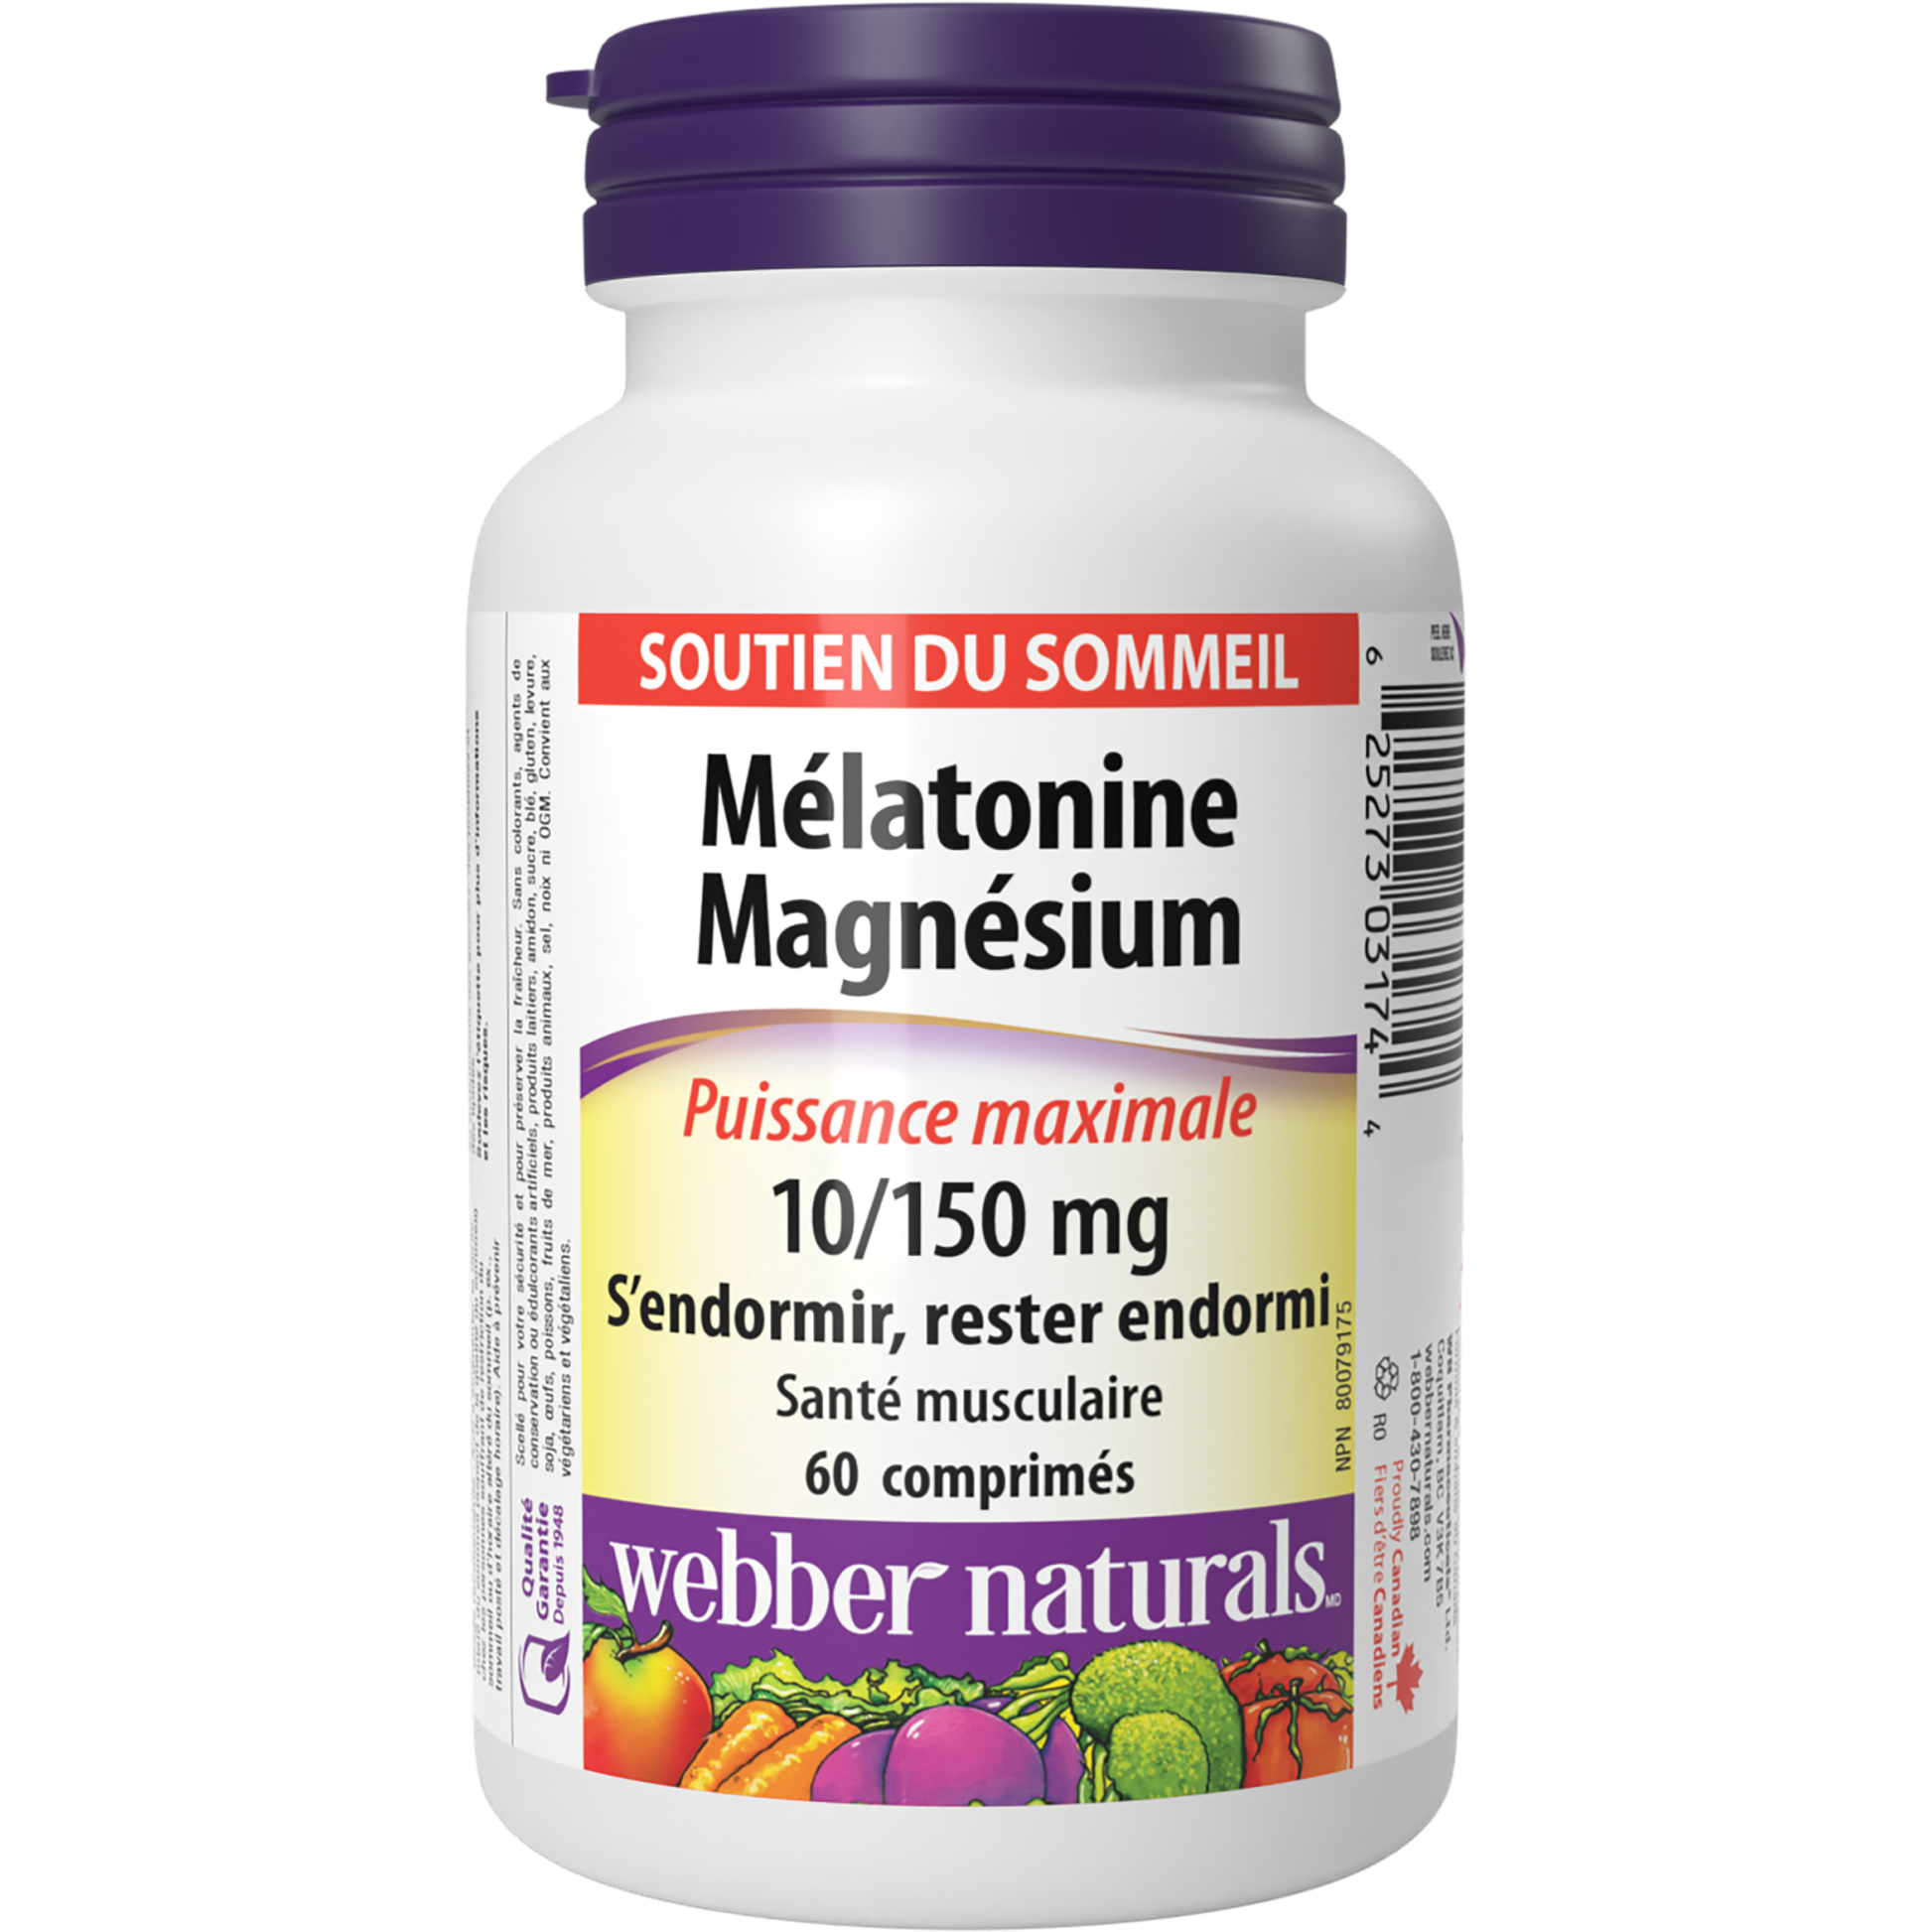 Mélatonine Magnésium Puissance maximale 10/150 mg for Webber Naturals|v|hi-res|WN3174